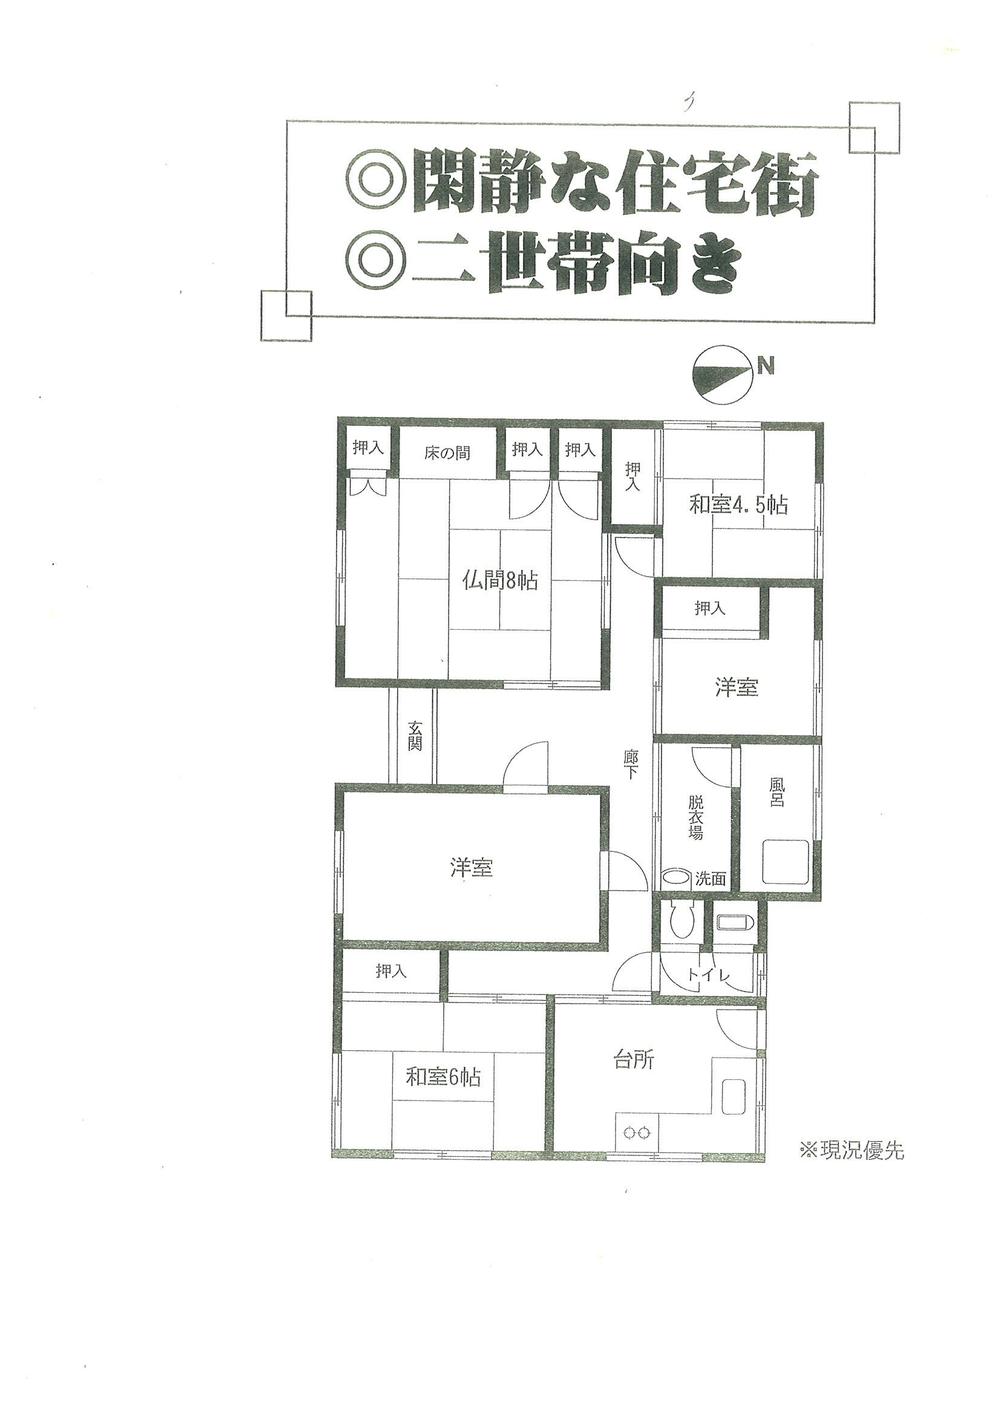 Floor plan. 14.9 million yen, 5DK, Land area 363.29 sq m , Building area 111.8 sq m current state priority